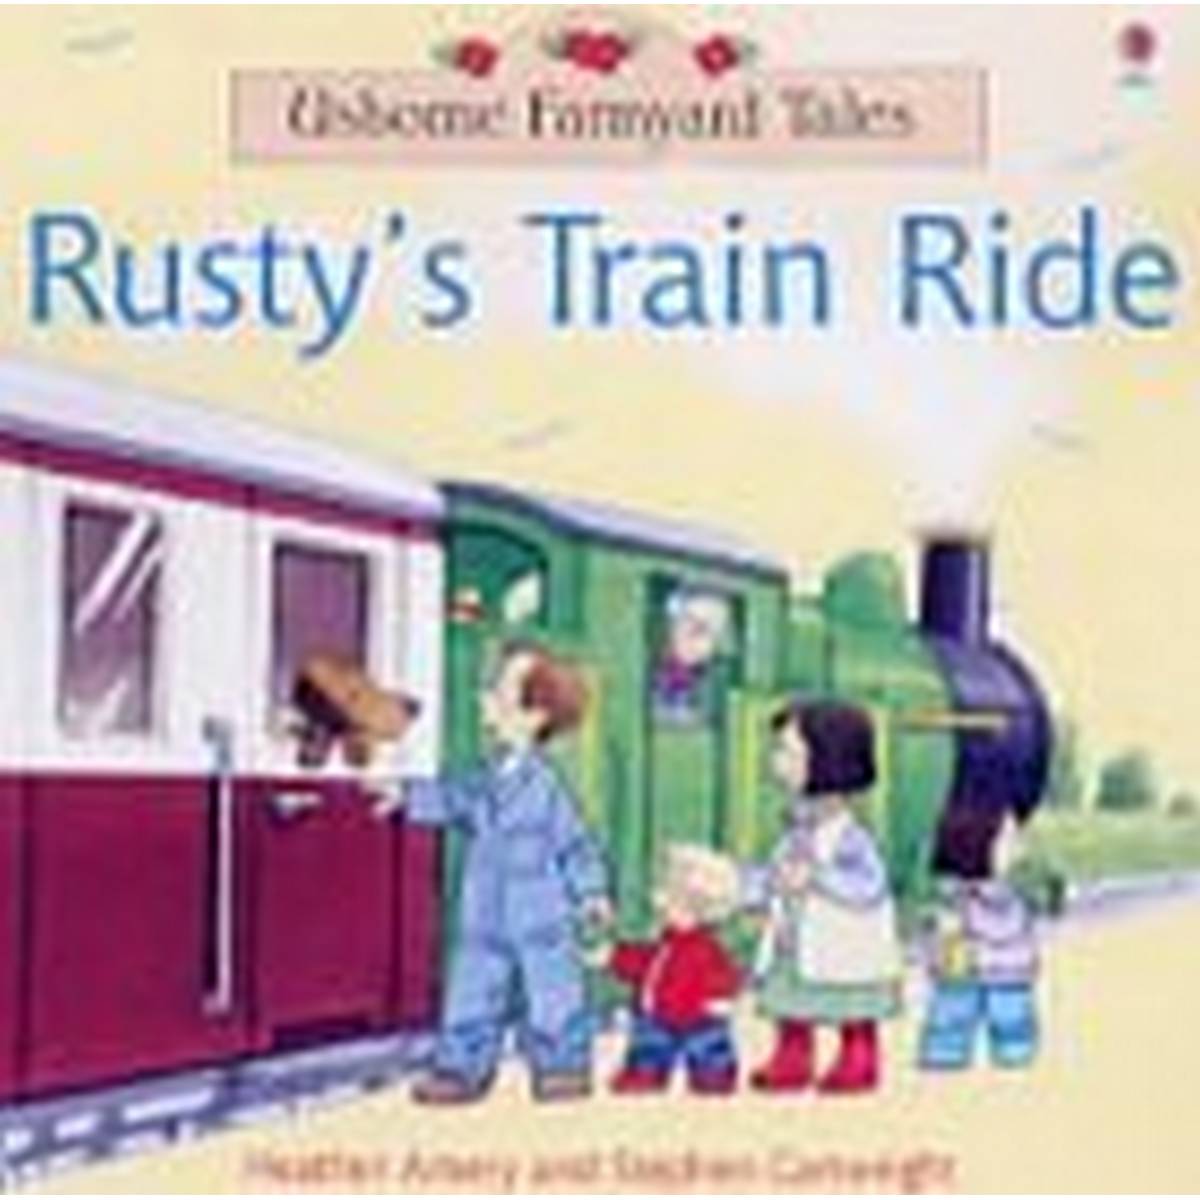 Rusty's Train Ride (Farmyard Tales)